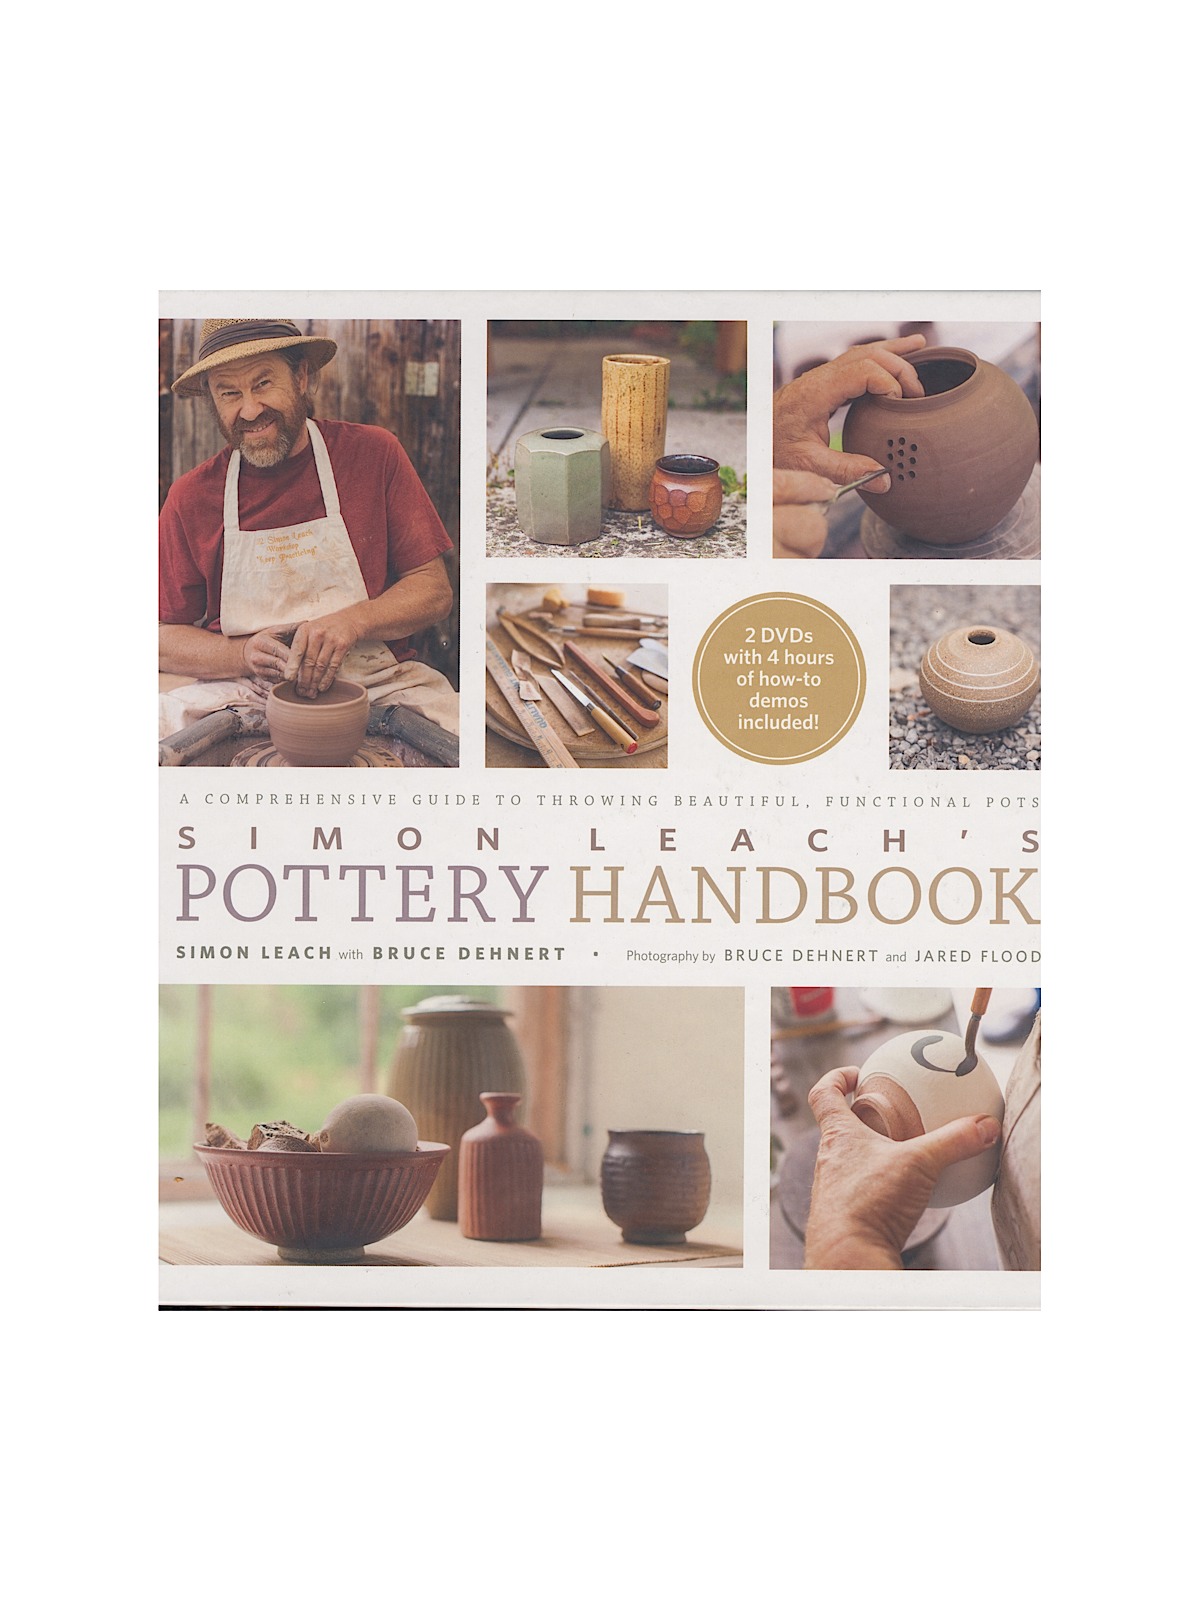 Pottery Handbook Each